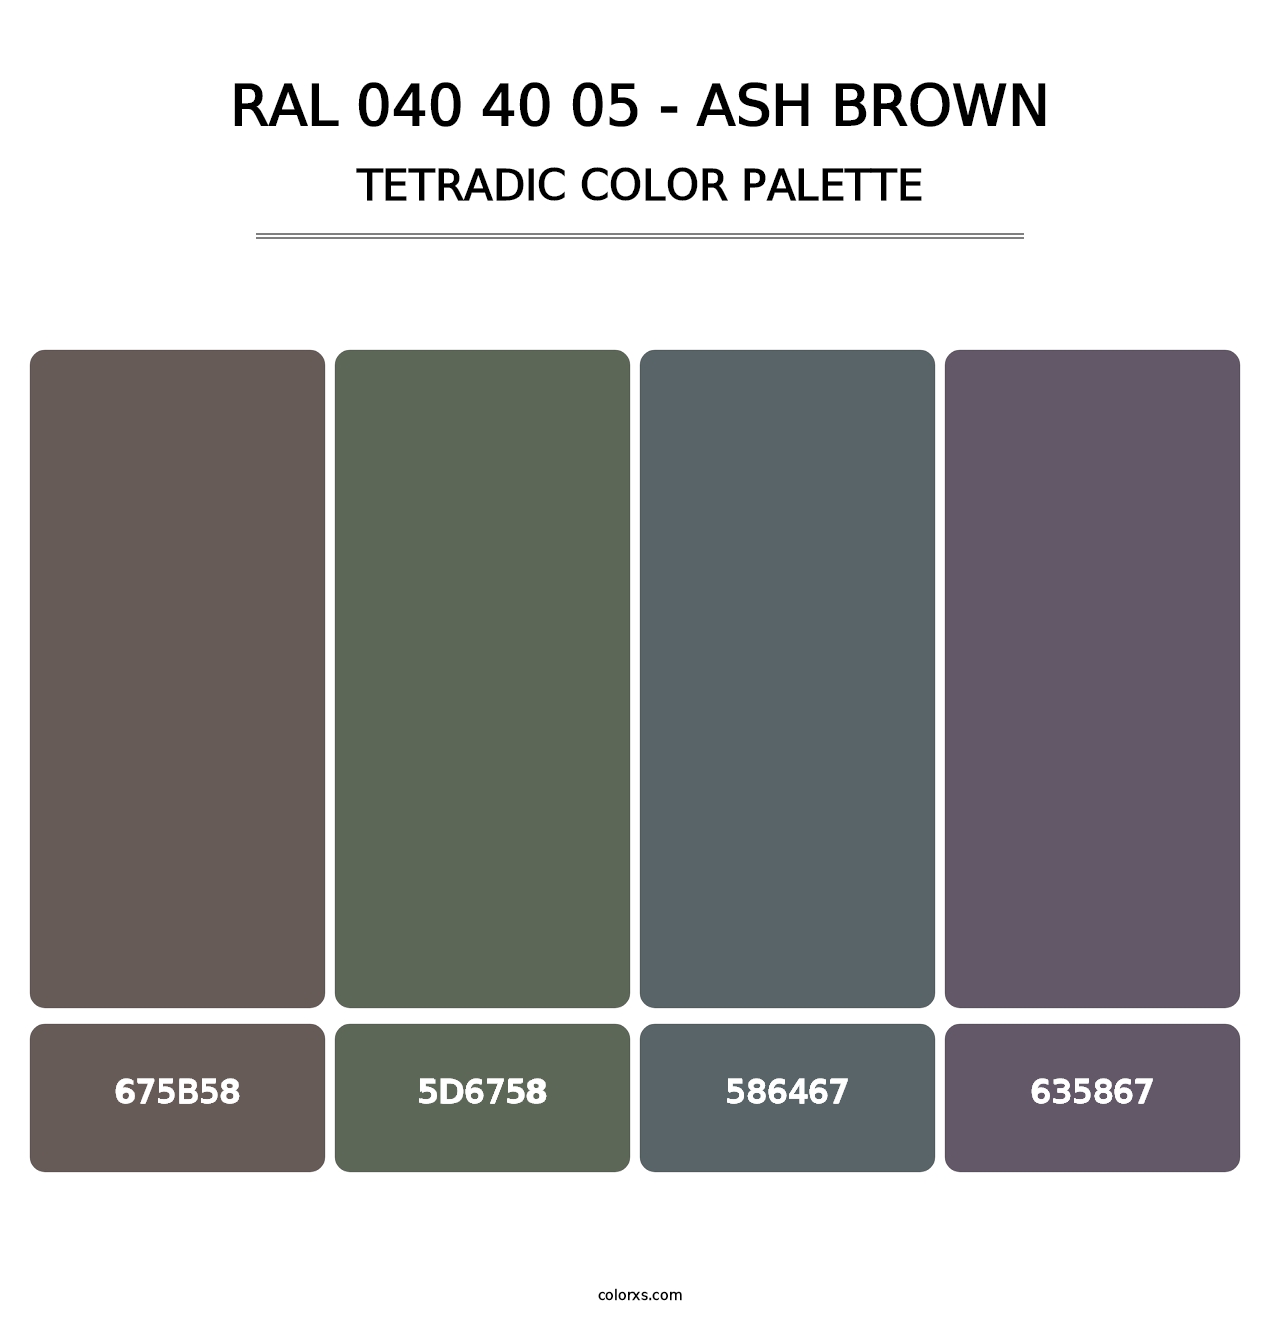 RAL 040 40 05 - Ash Brown - Tetradic Color Palette